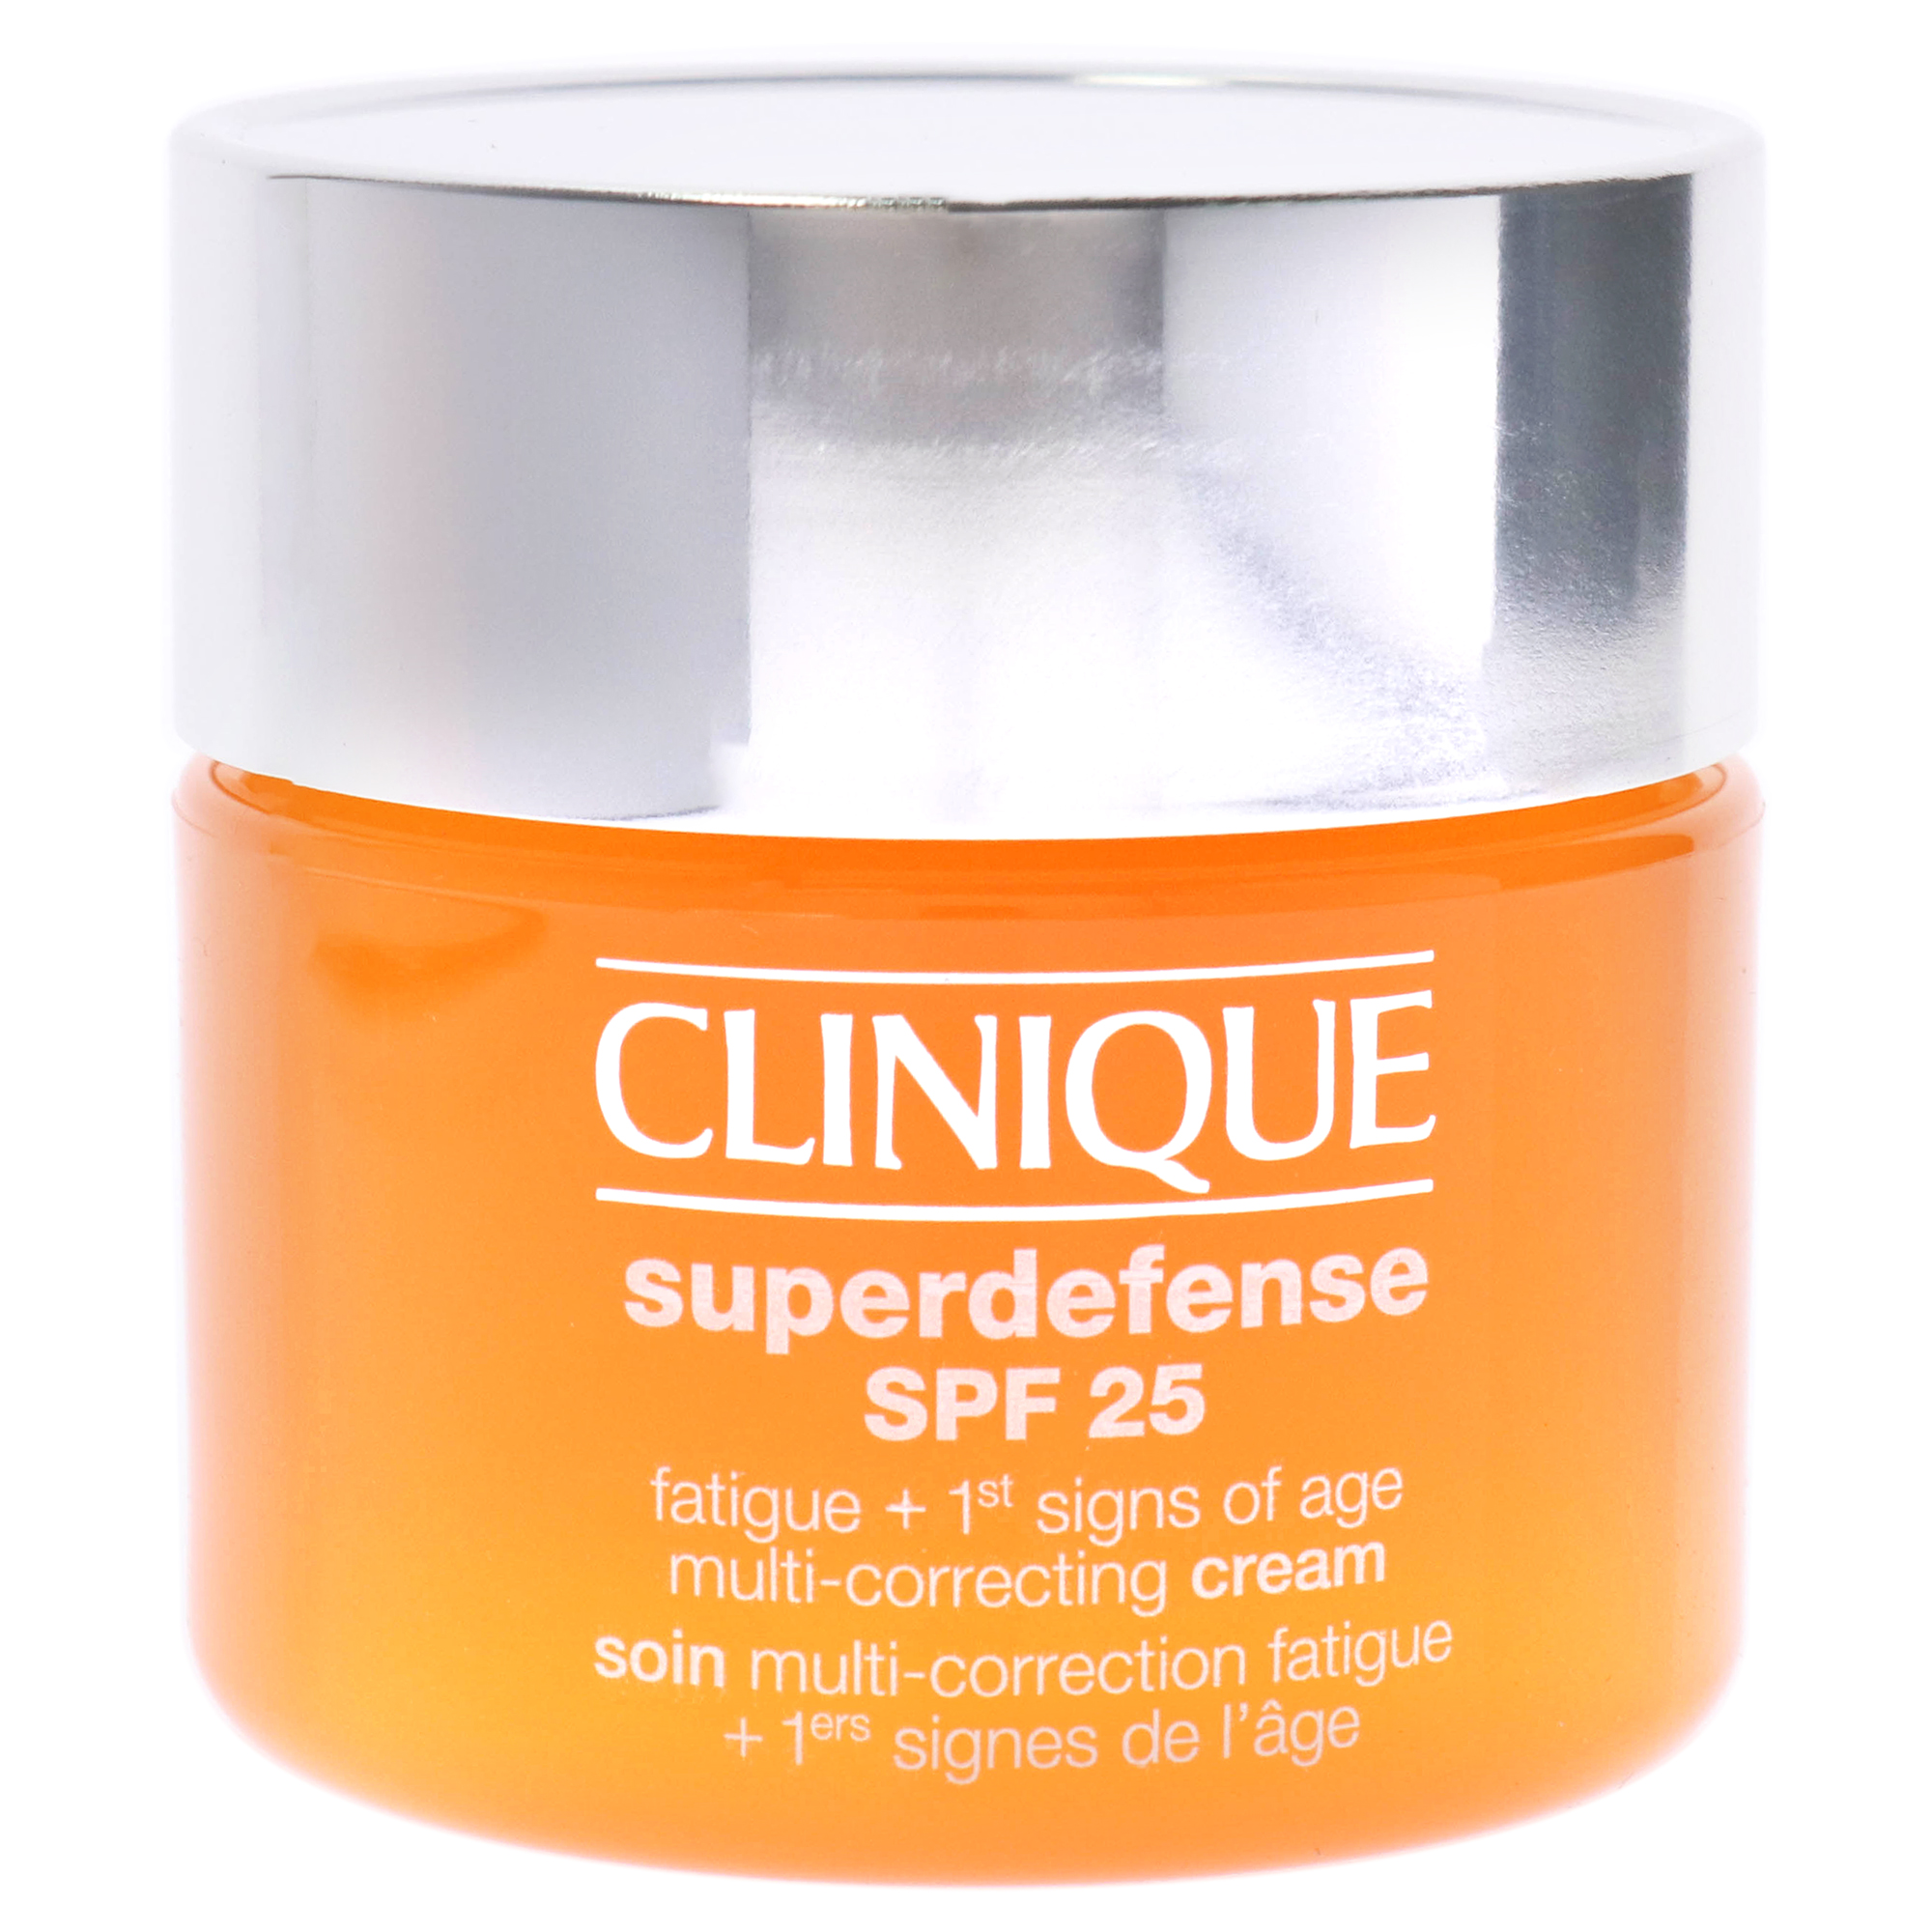 Clinique Superdefense Multi-Correcting Cream SPF 25 - Type I-II Dry Skin, 1.7 Fl Oz Pack of 1 - image 2 of 2